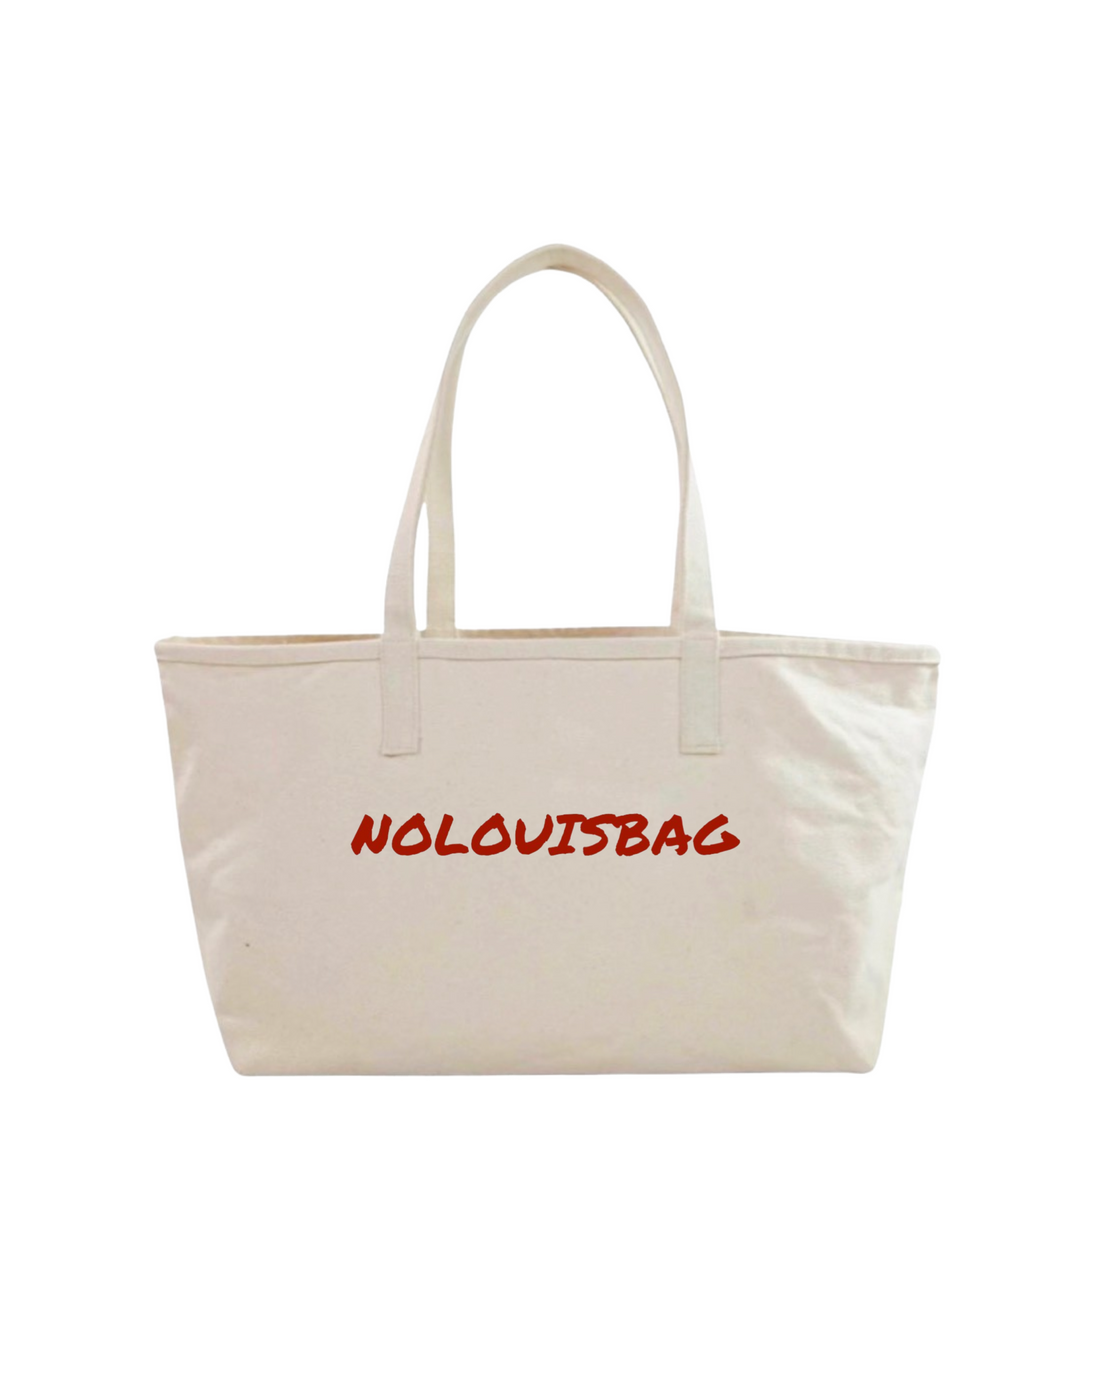 nolouisbag Bag small